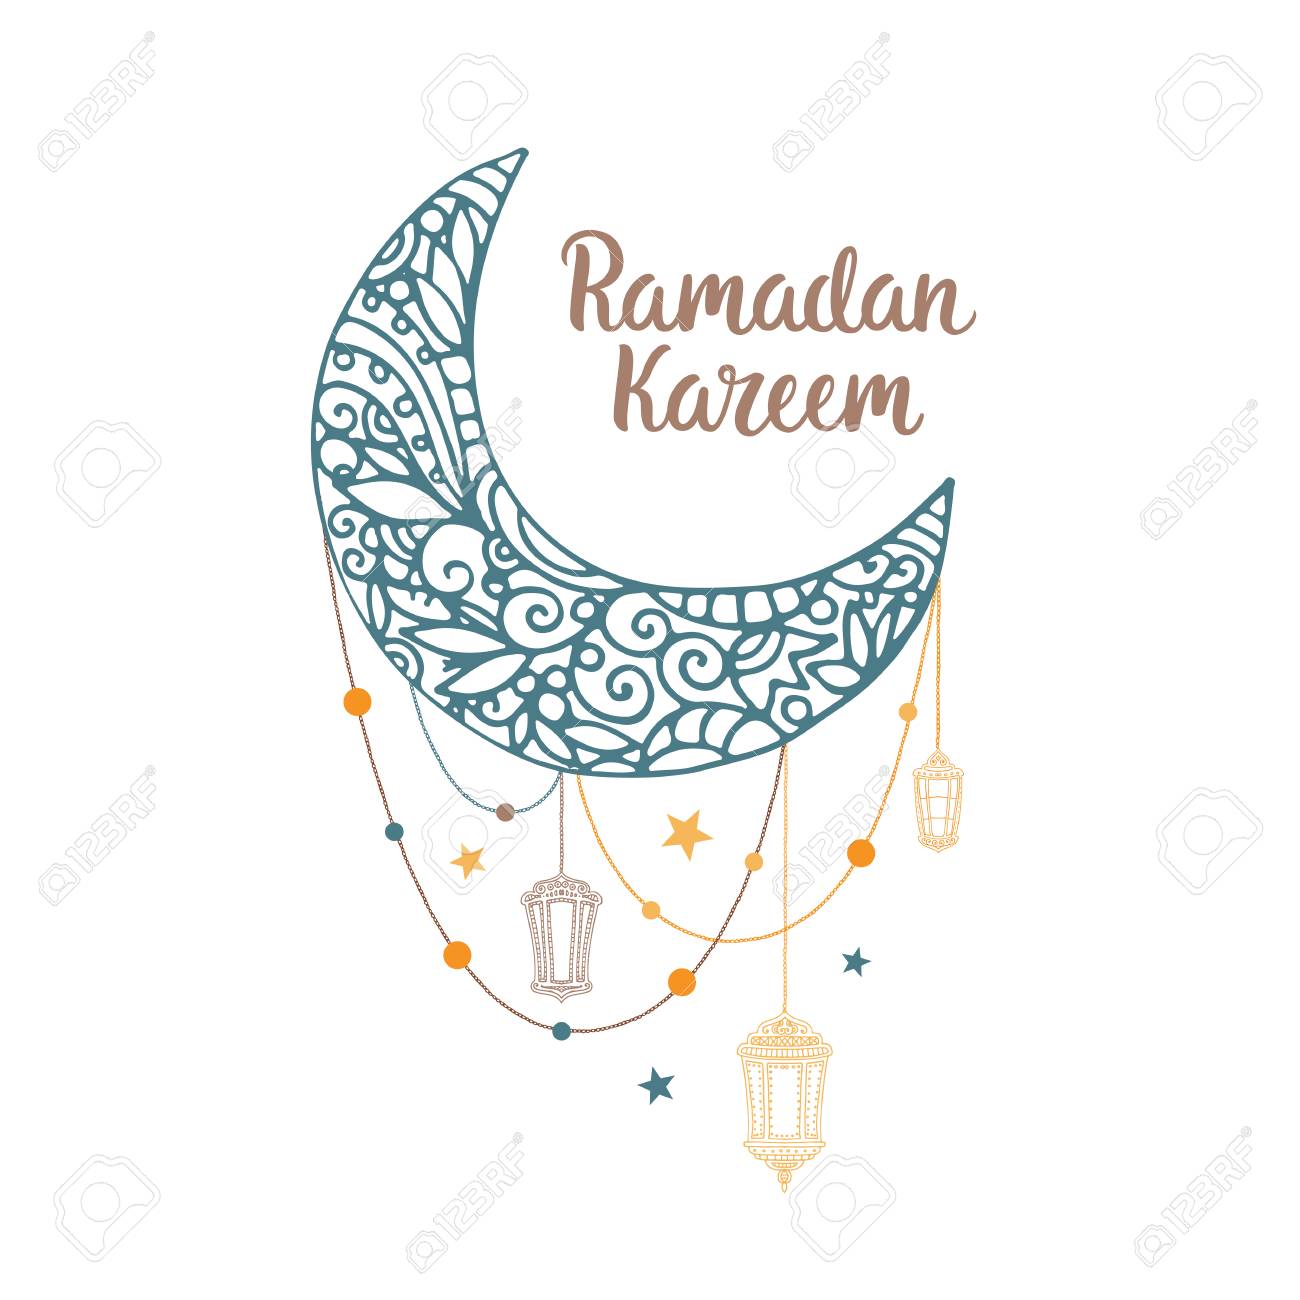 Drawn Moon ramadan kareem